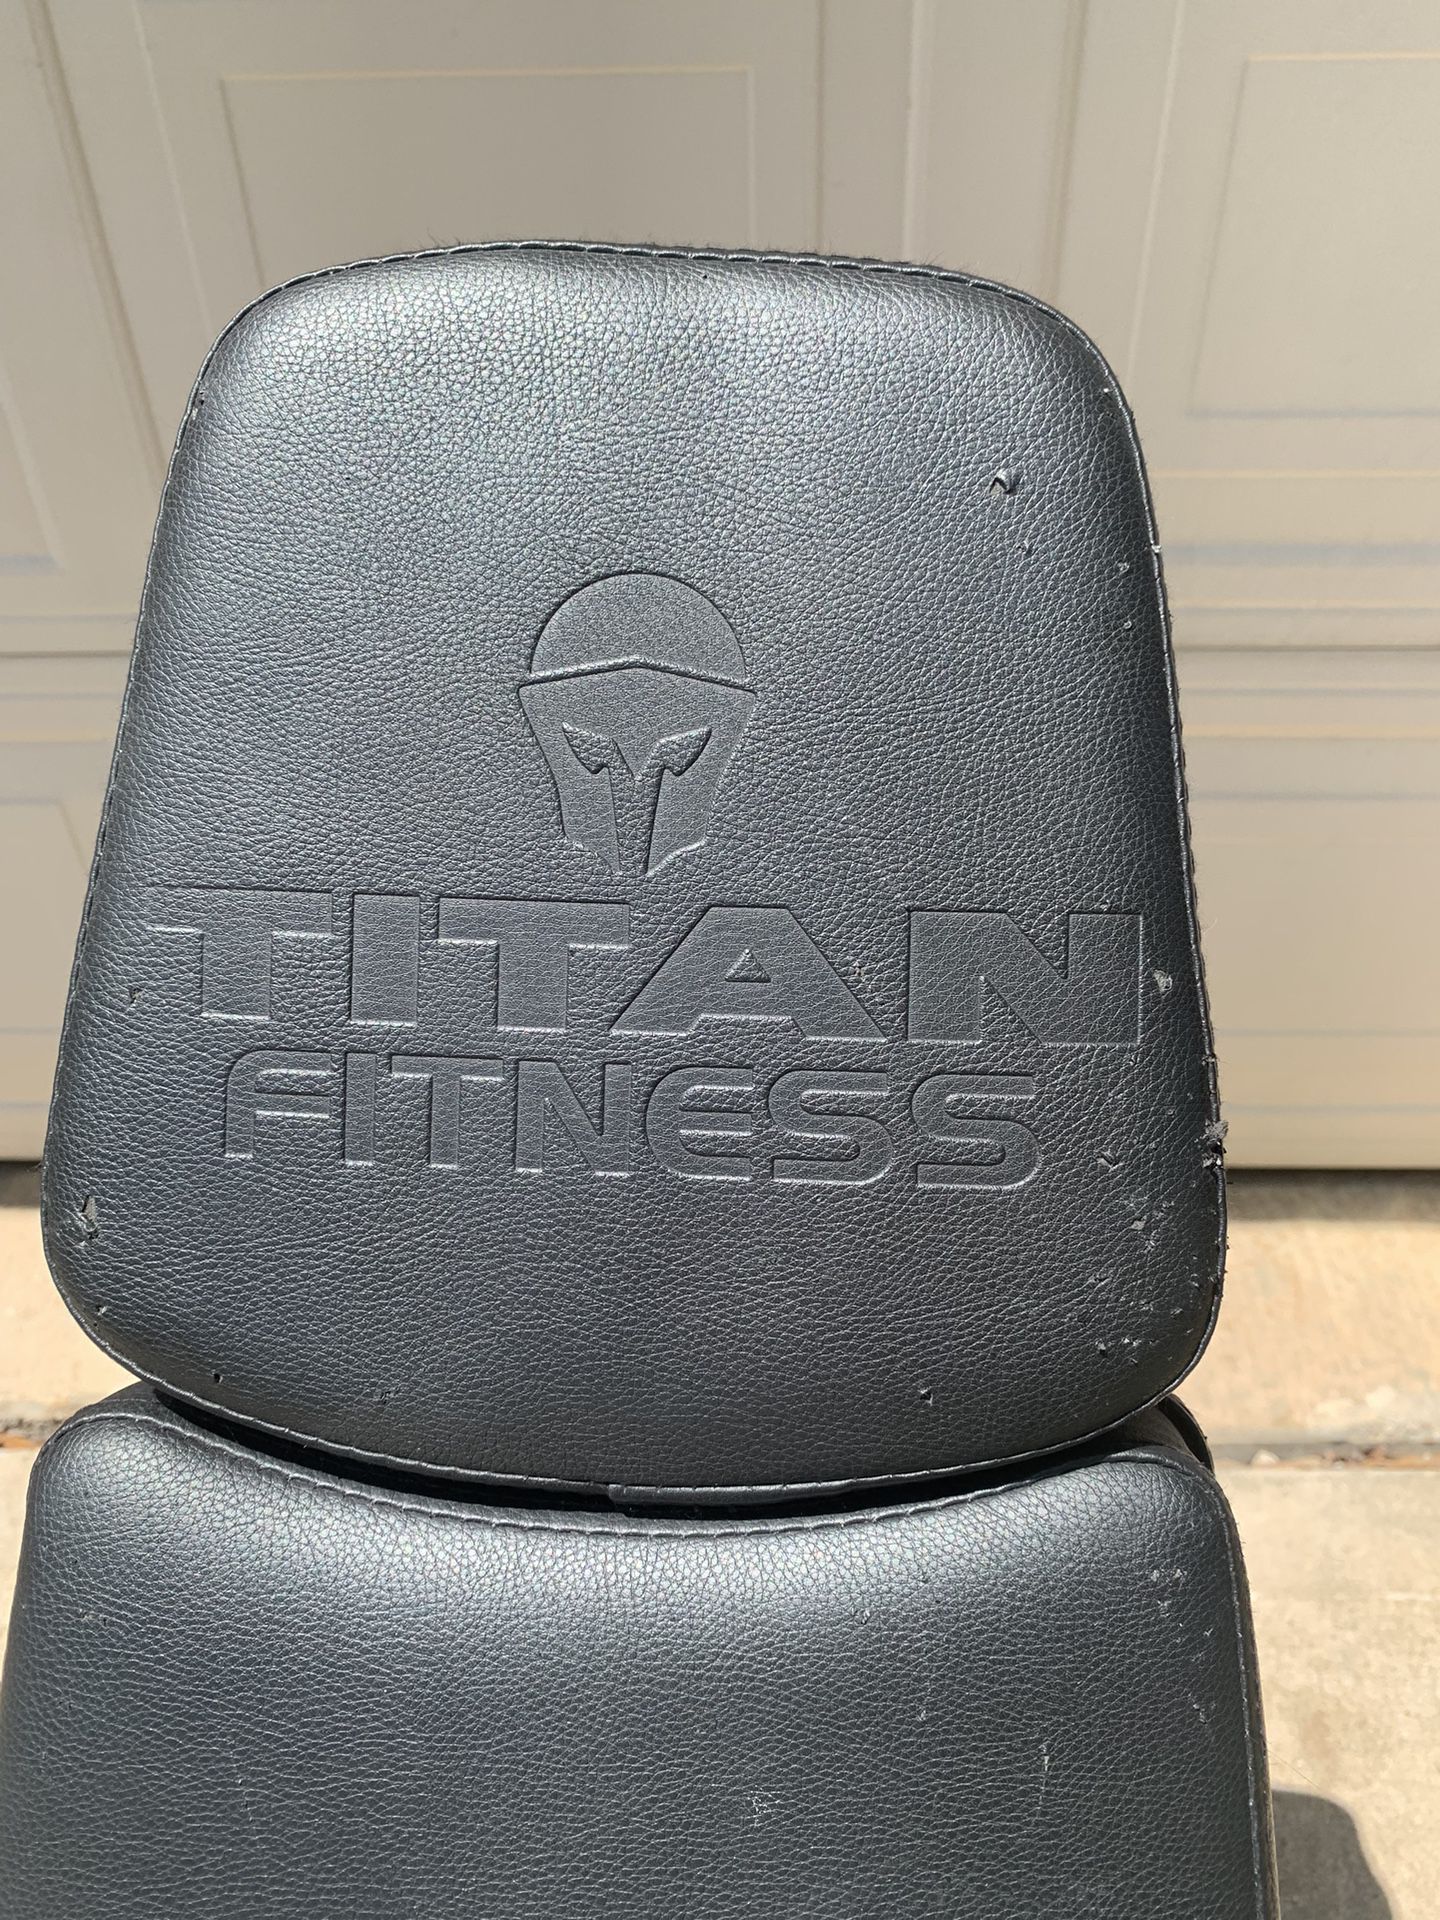 HEAVY DUTY Titan Fitness FID Bench flat /incline / Decline / military bench press